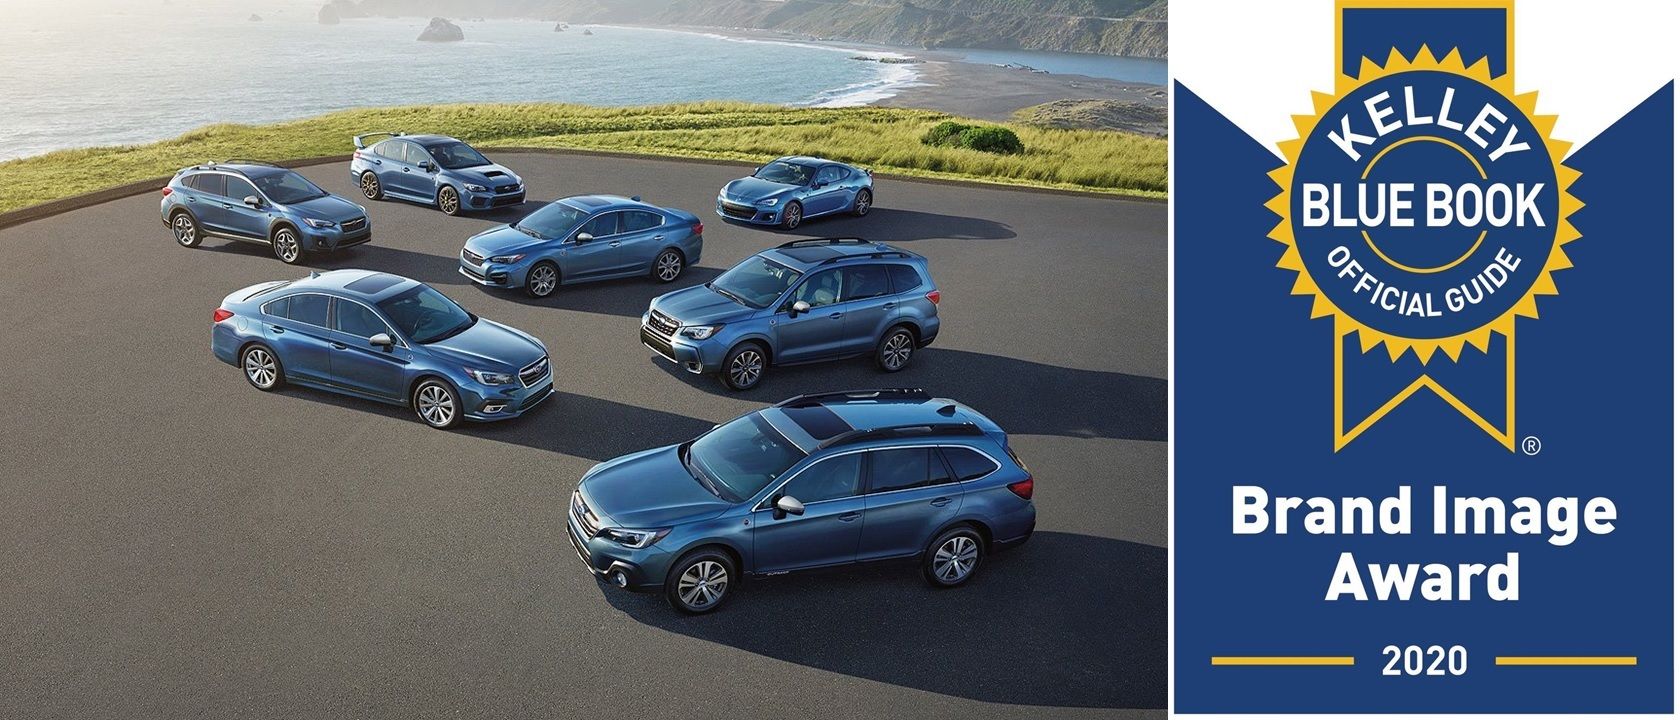 Kelley Blue Book Named Subaru Best Overall Brand in 2020